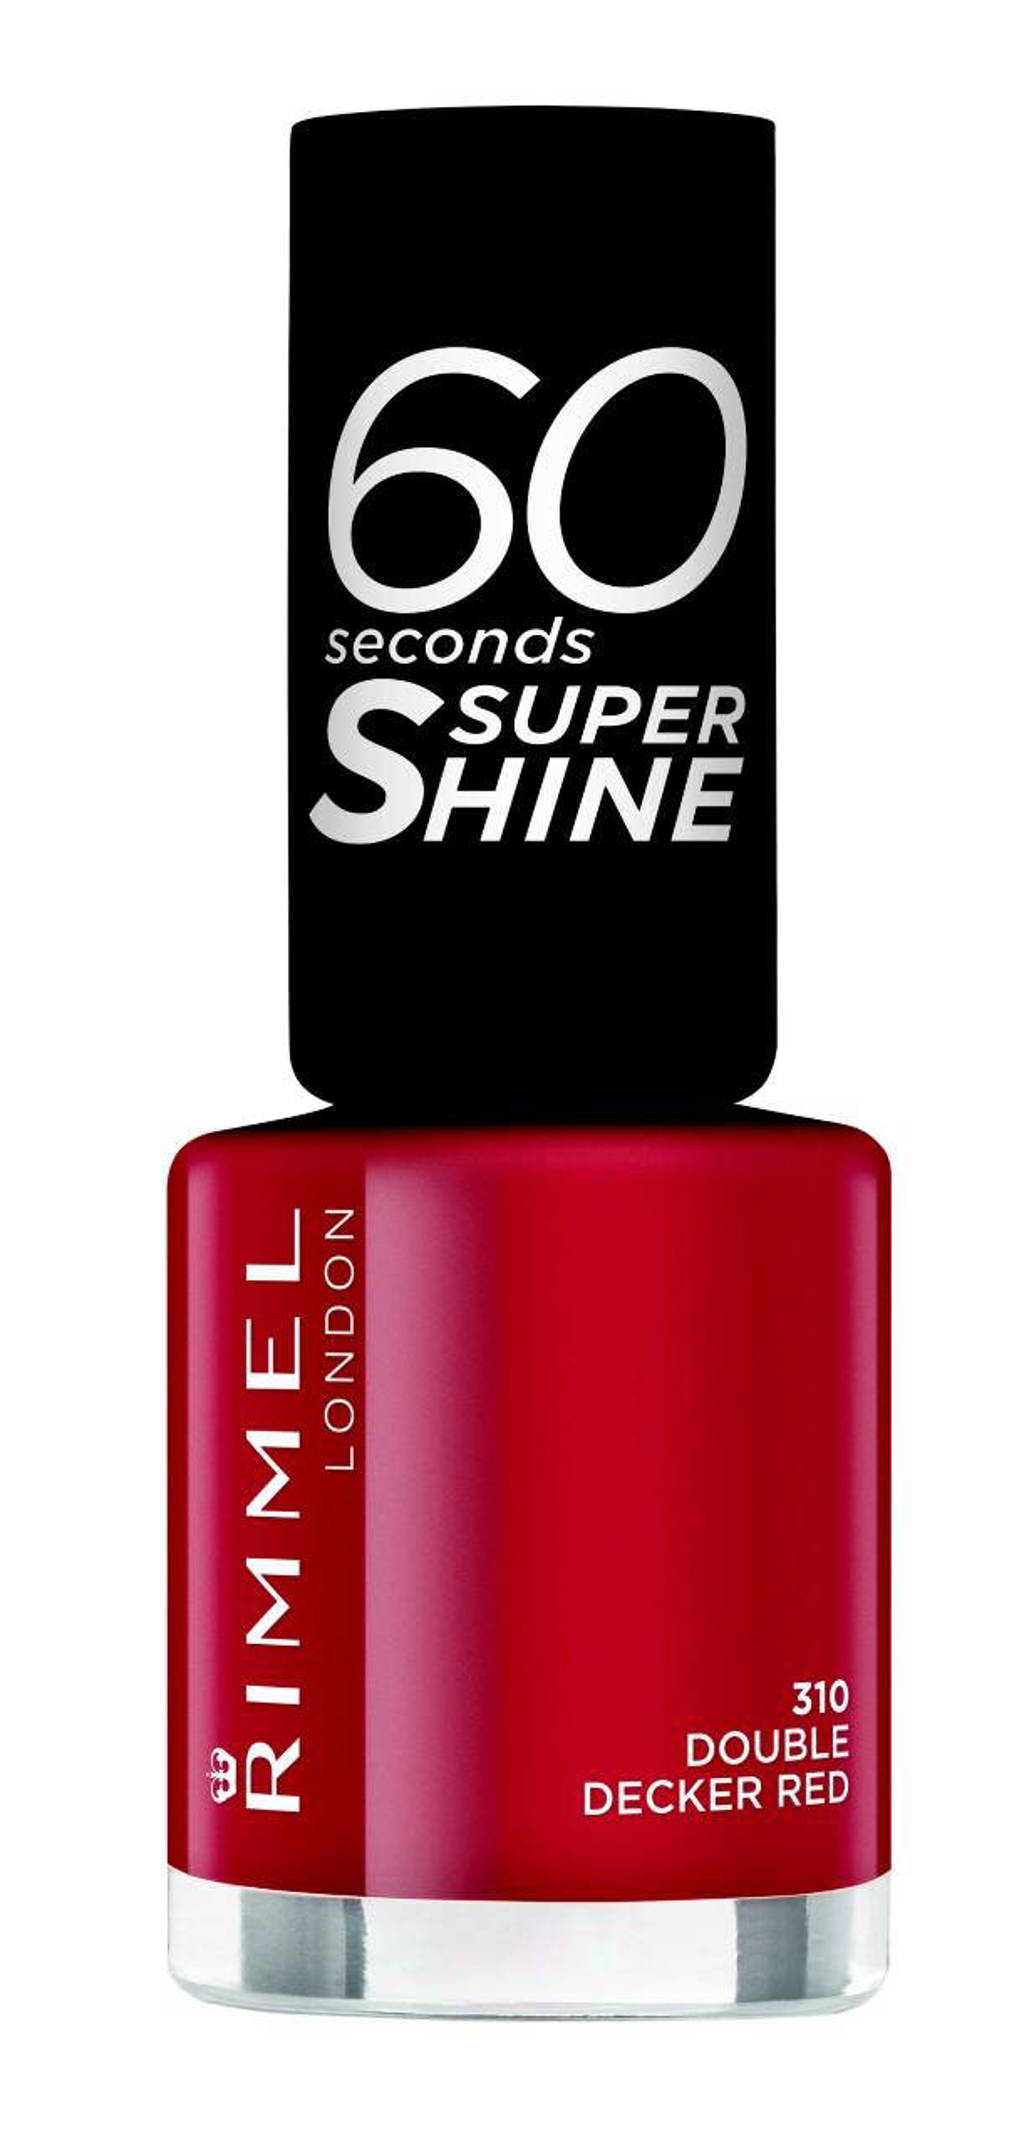 Rimmel London 60 Seconds SuperShine nagellak - 310 Double Decker Red